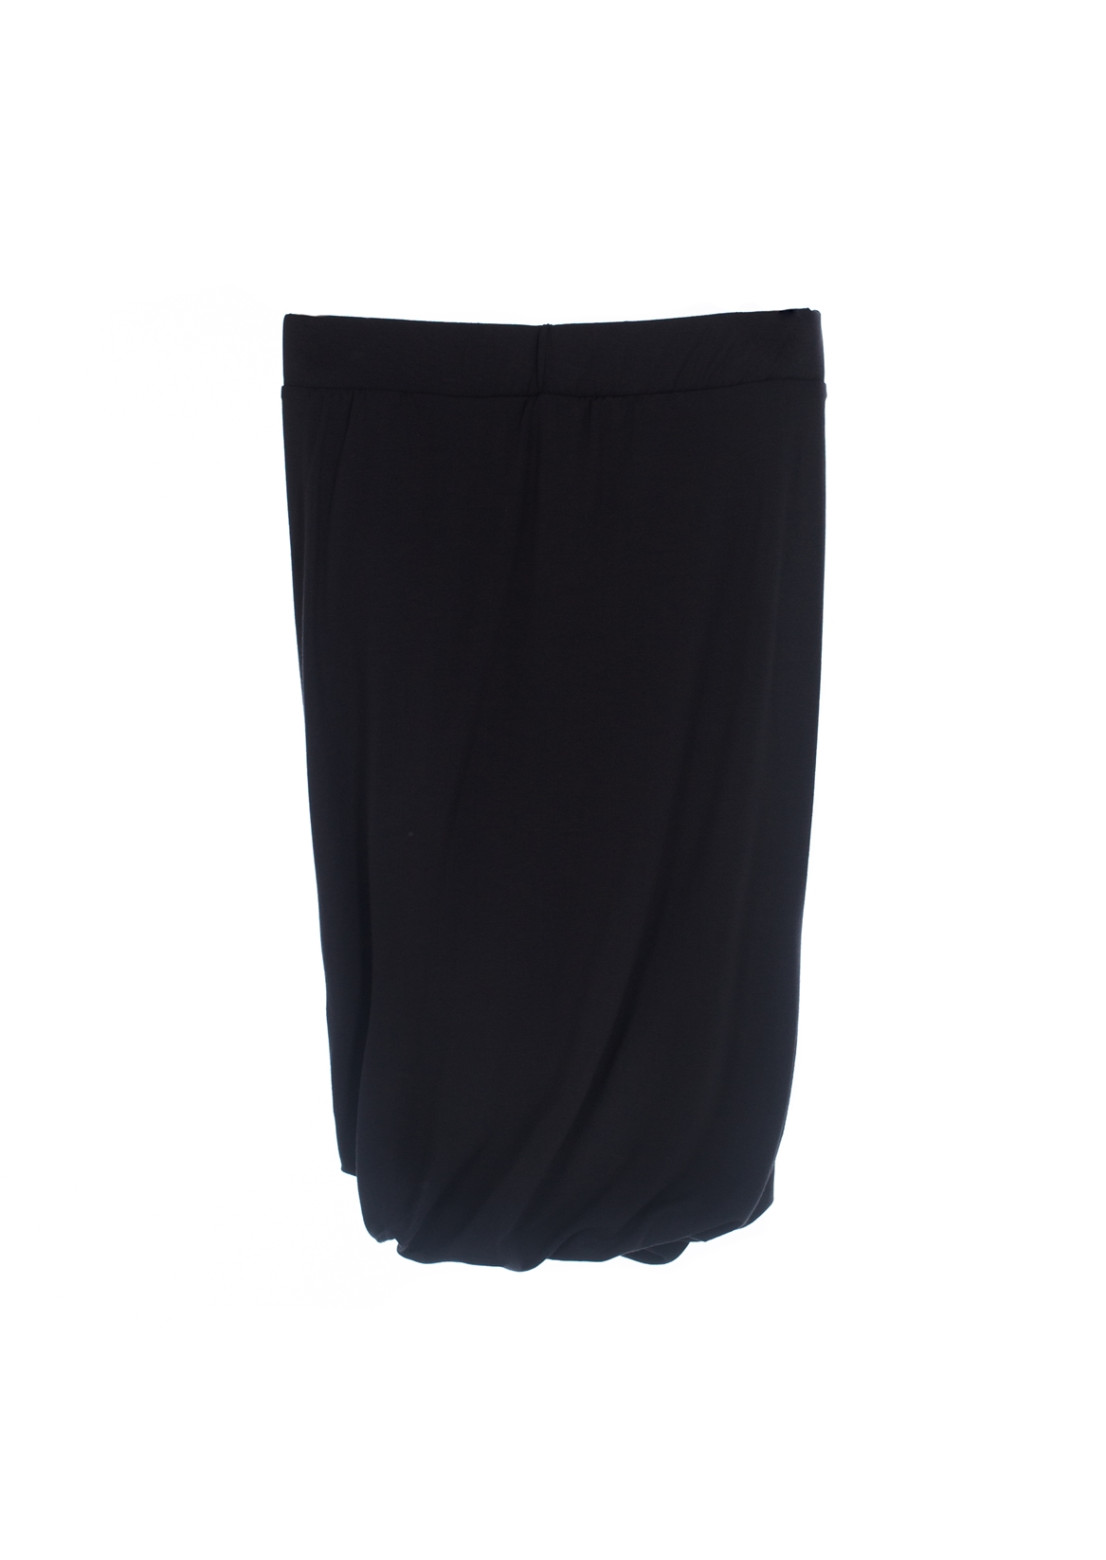 Dark grey skirt with pleats